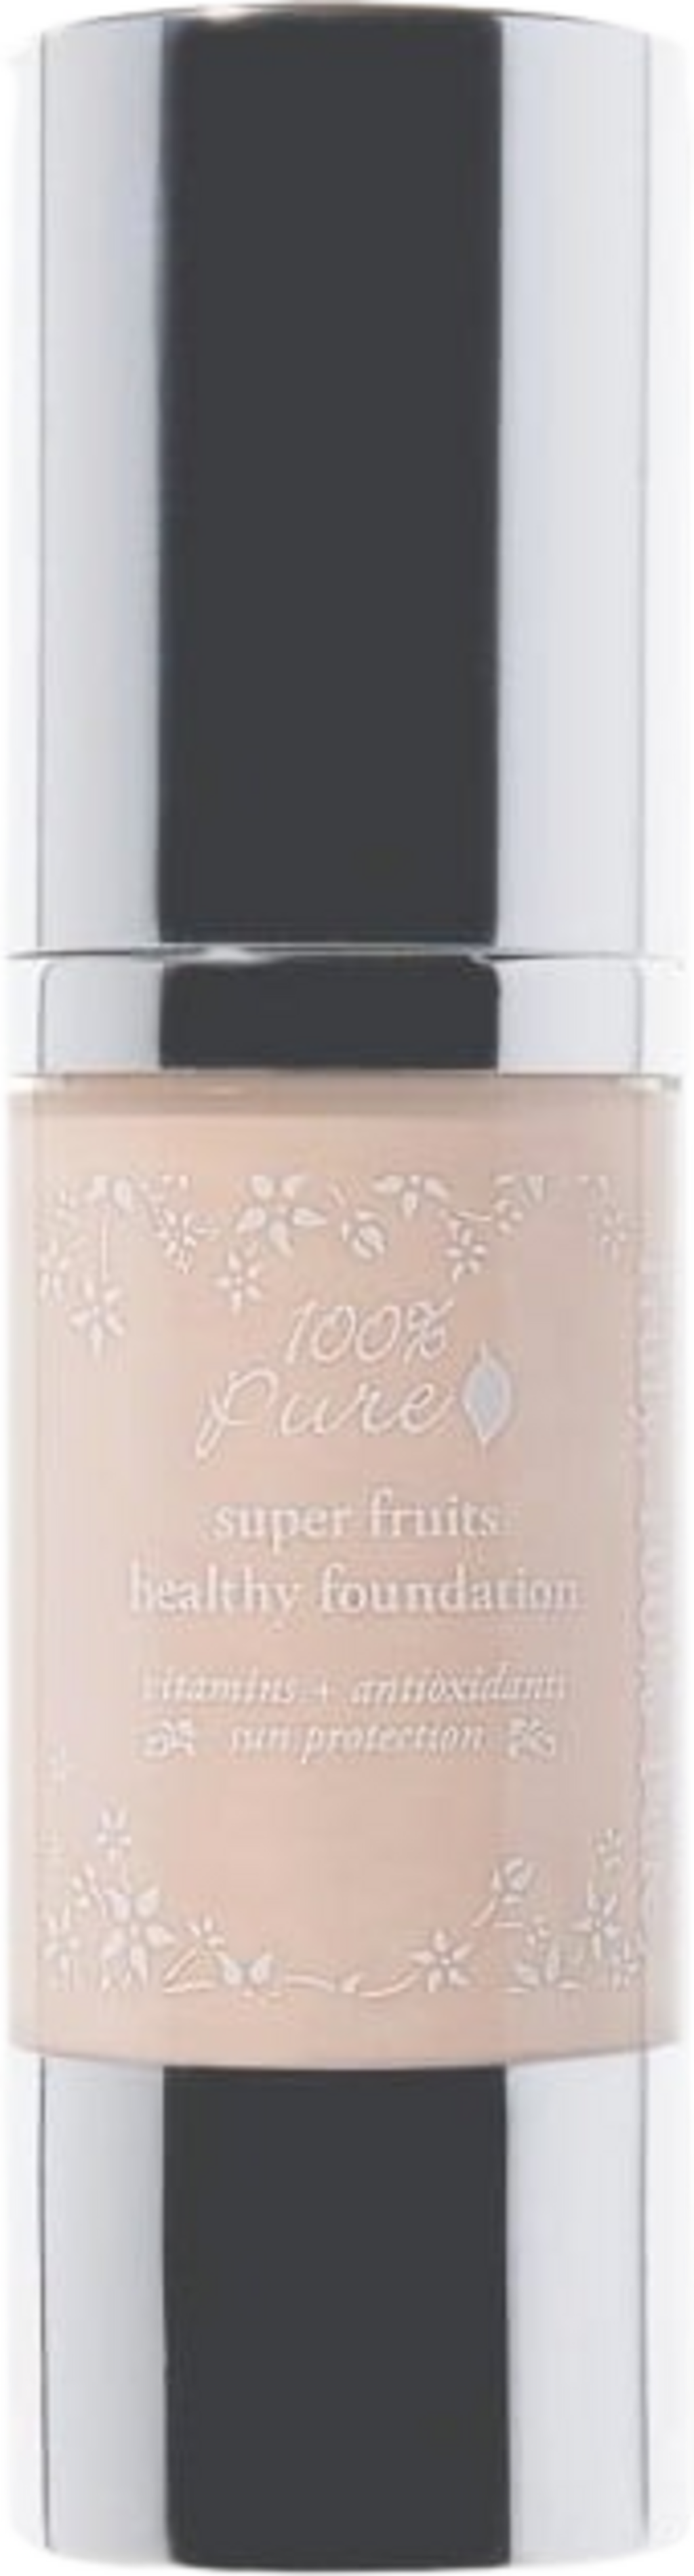 100% Pure Fruit Pigmented Healthy Foundation - Creme (fair)